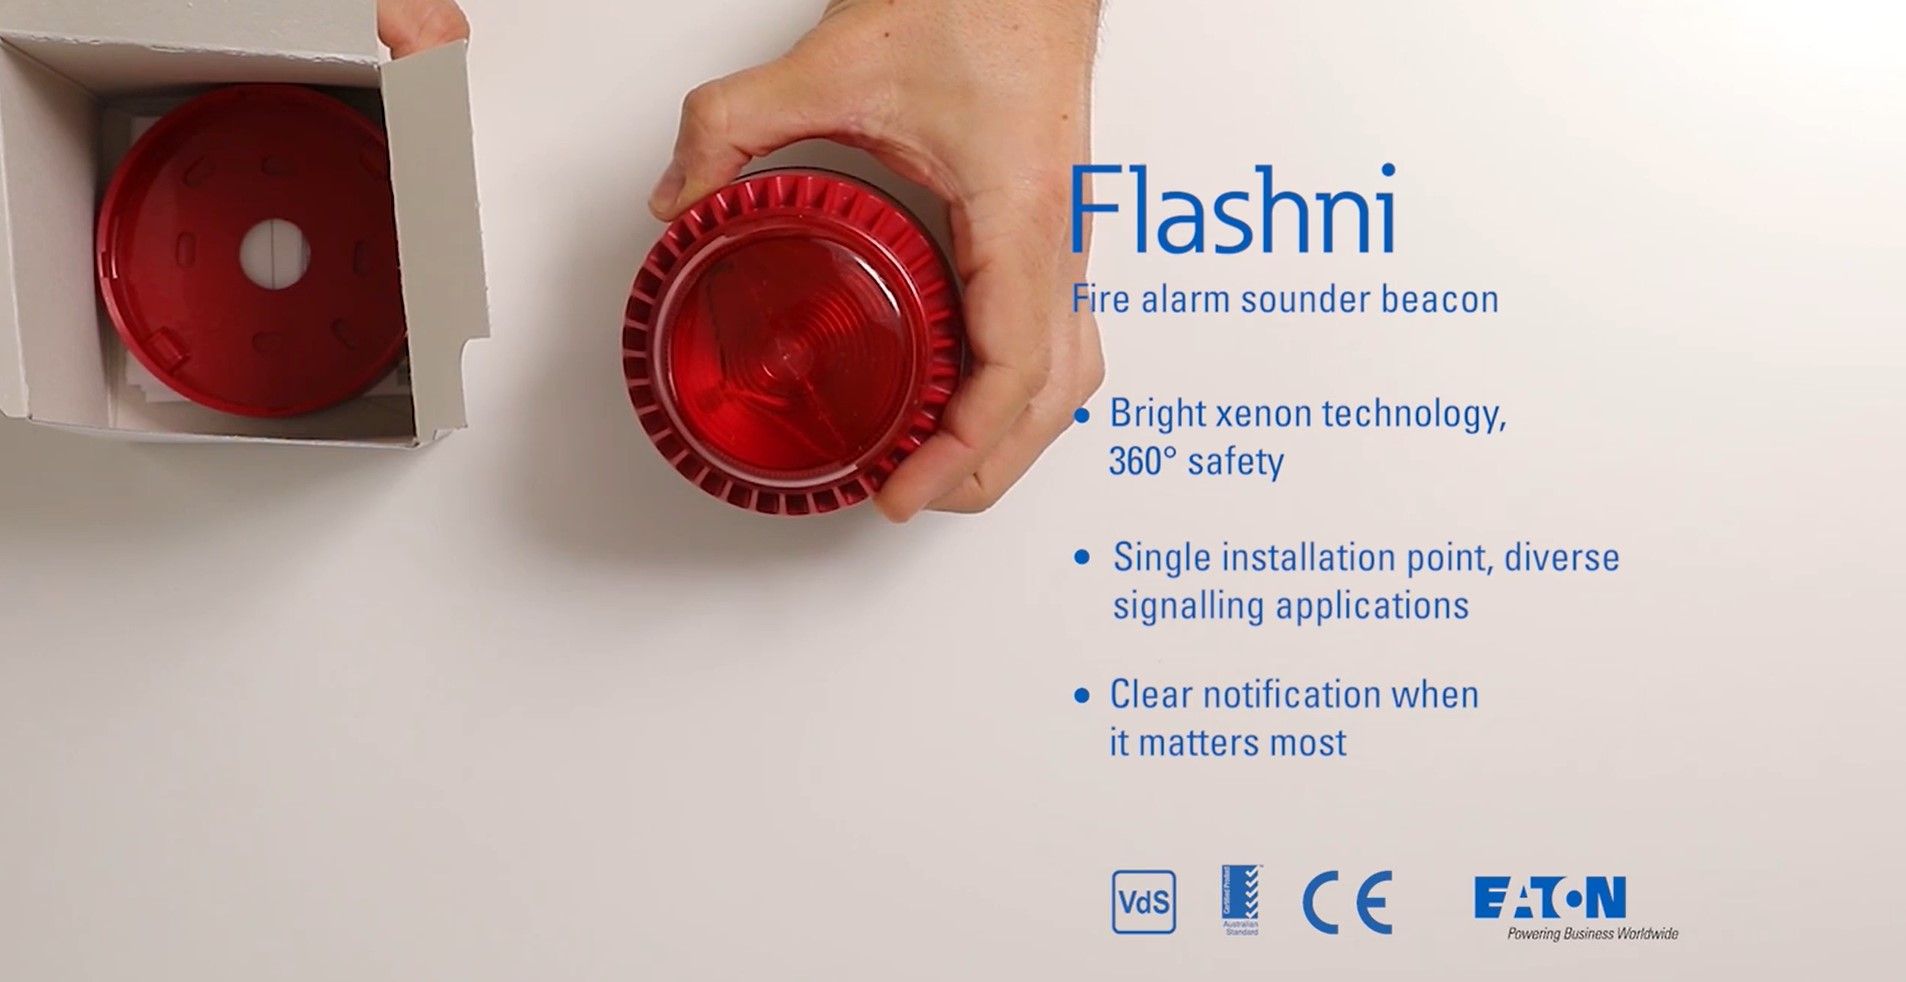 Unboxing the Flashni fire alarm sounder beacon